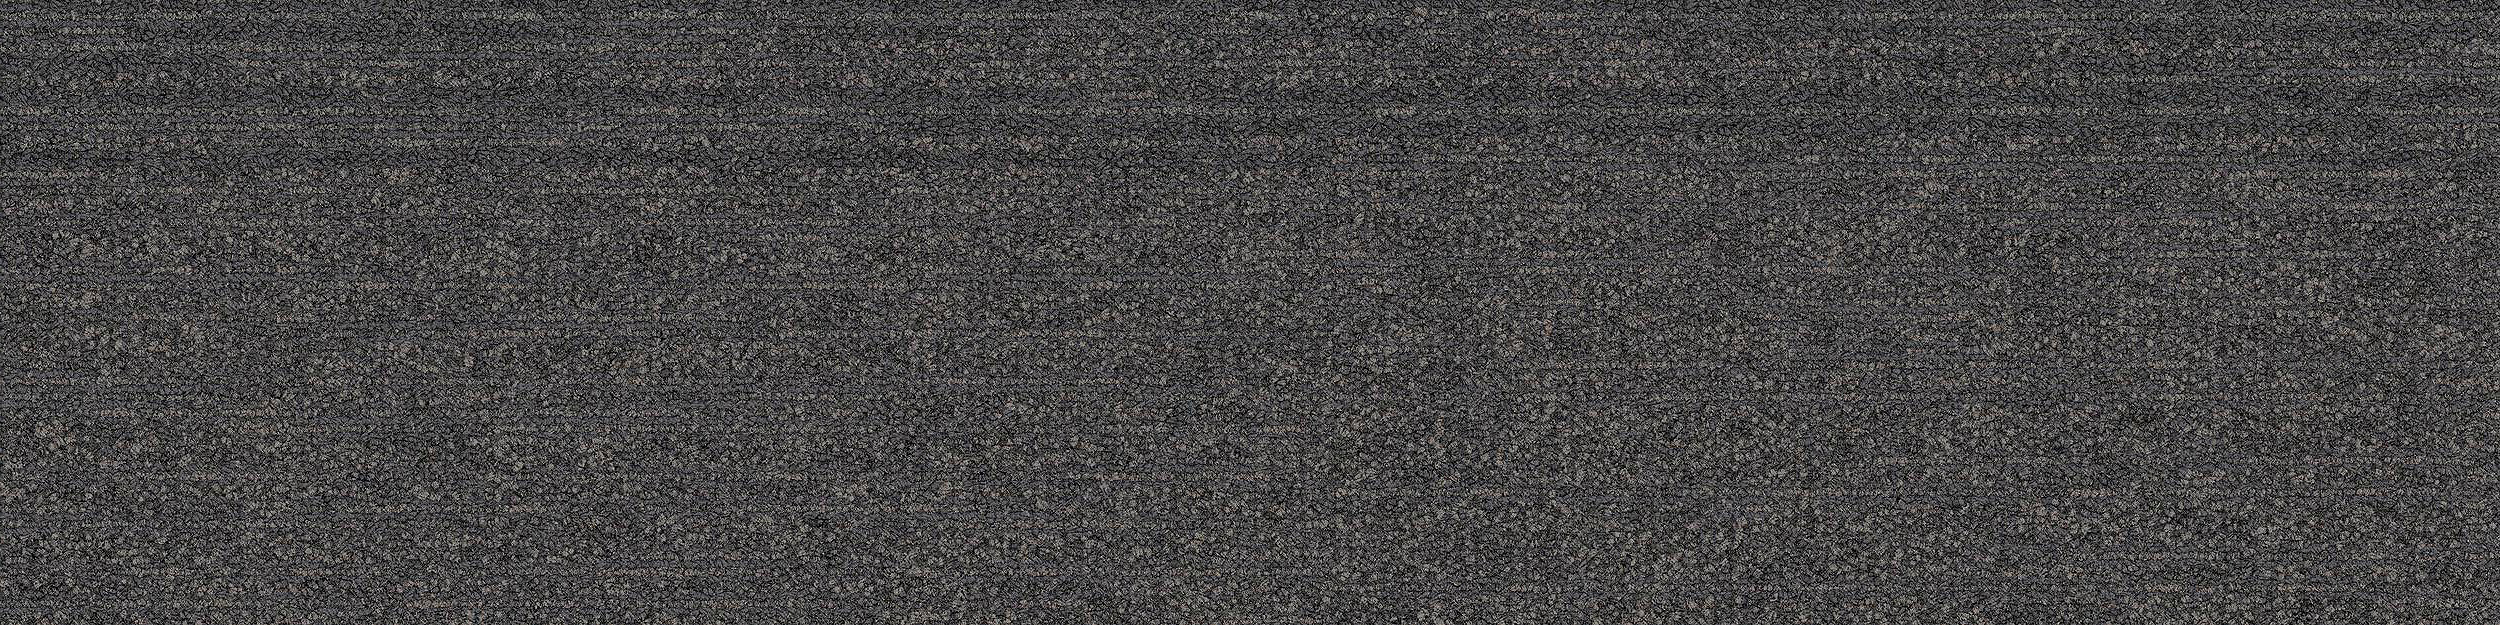 Harmonize Carpet Tile in Iron numéro d’image 11